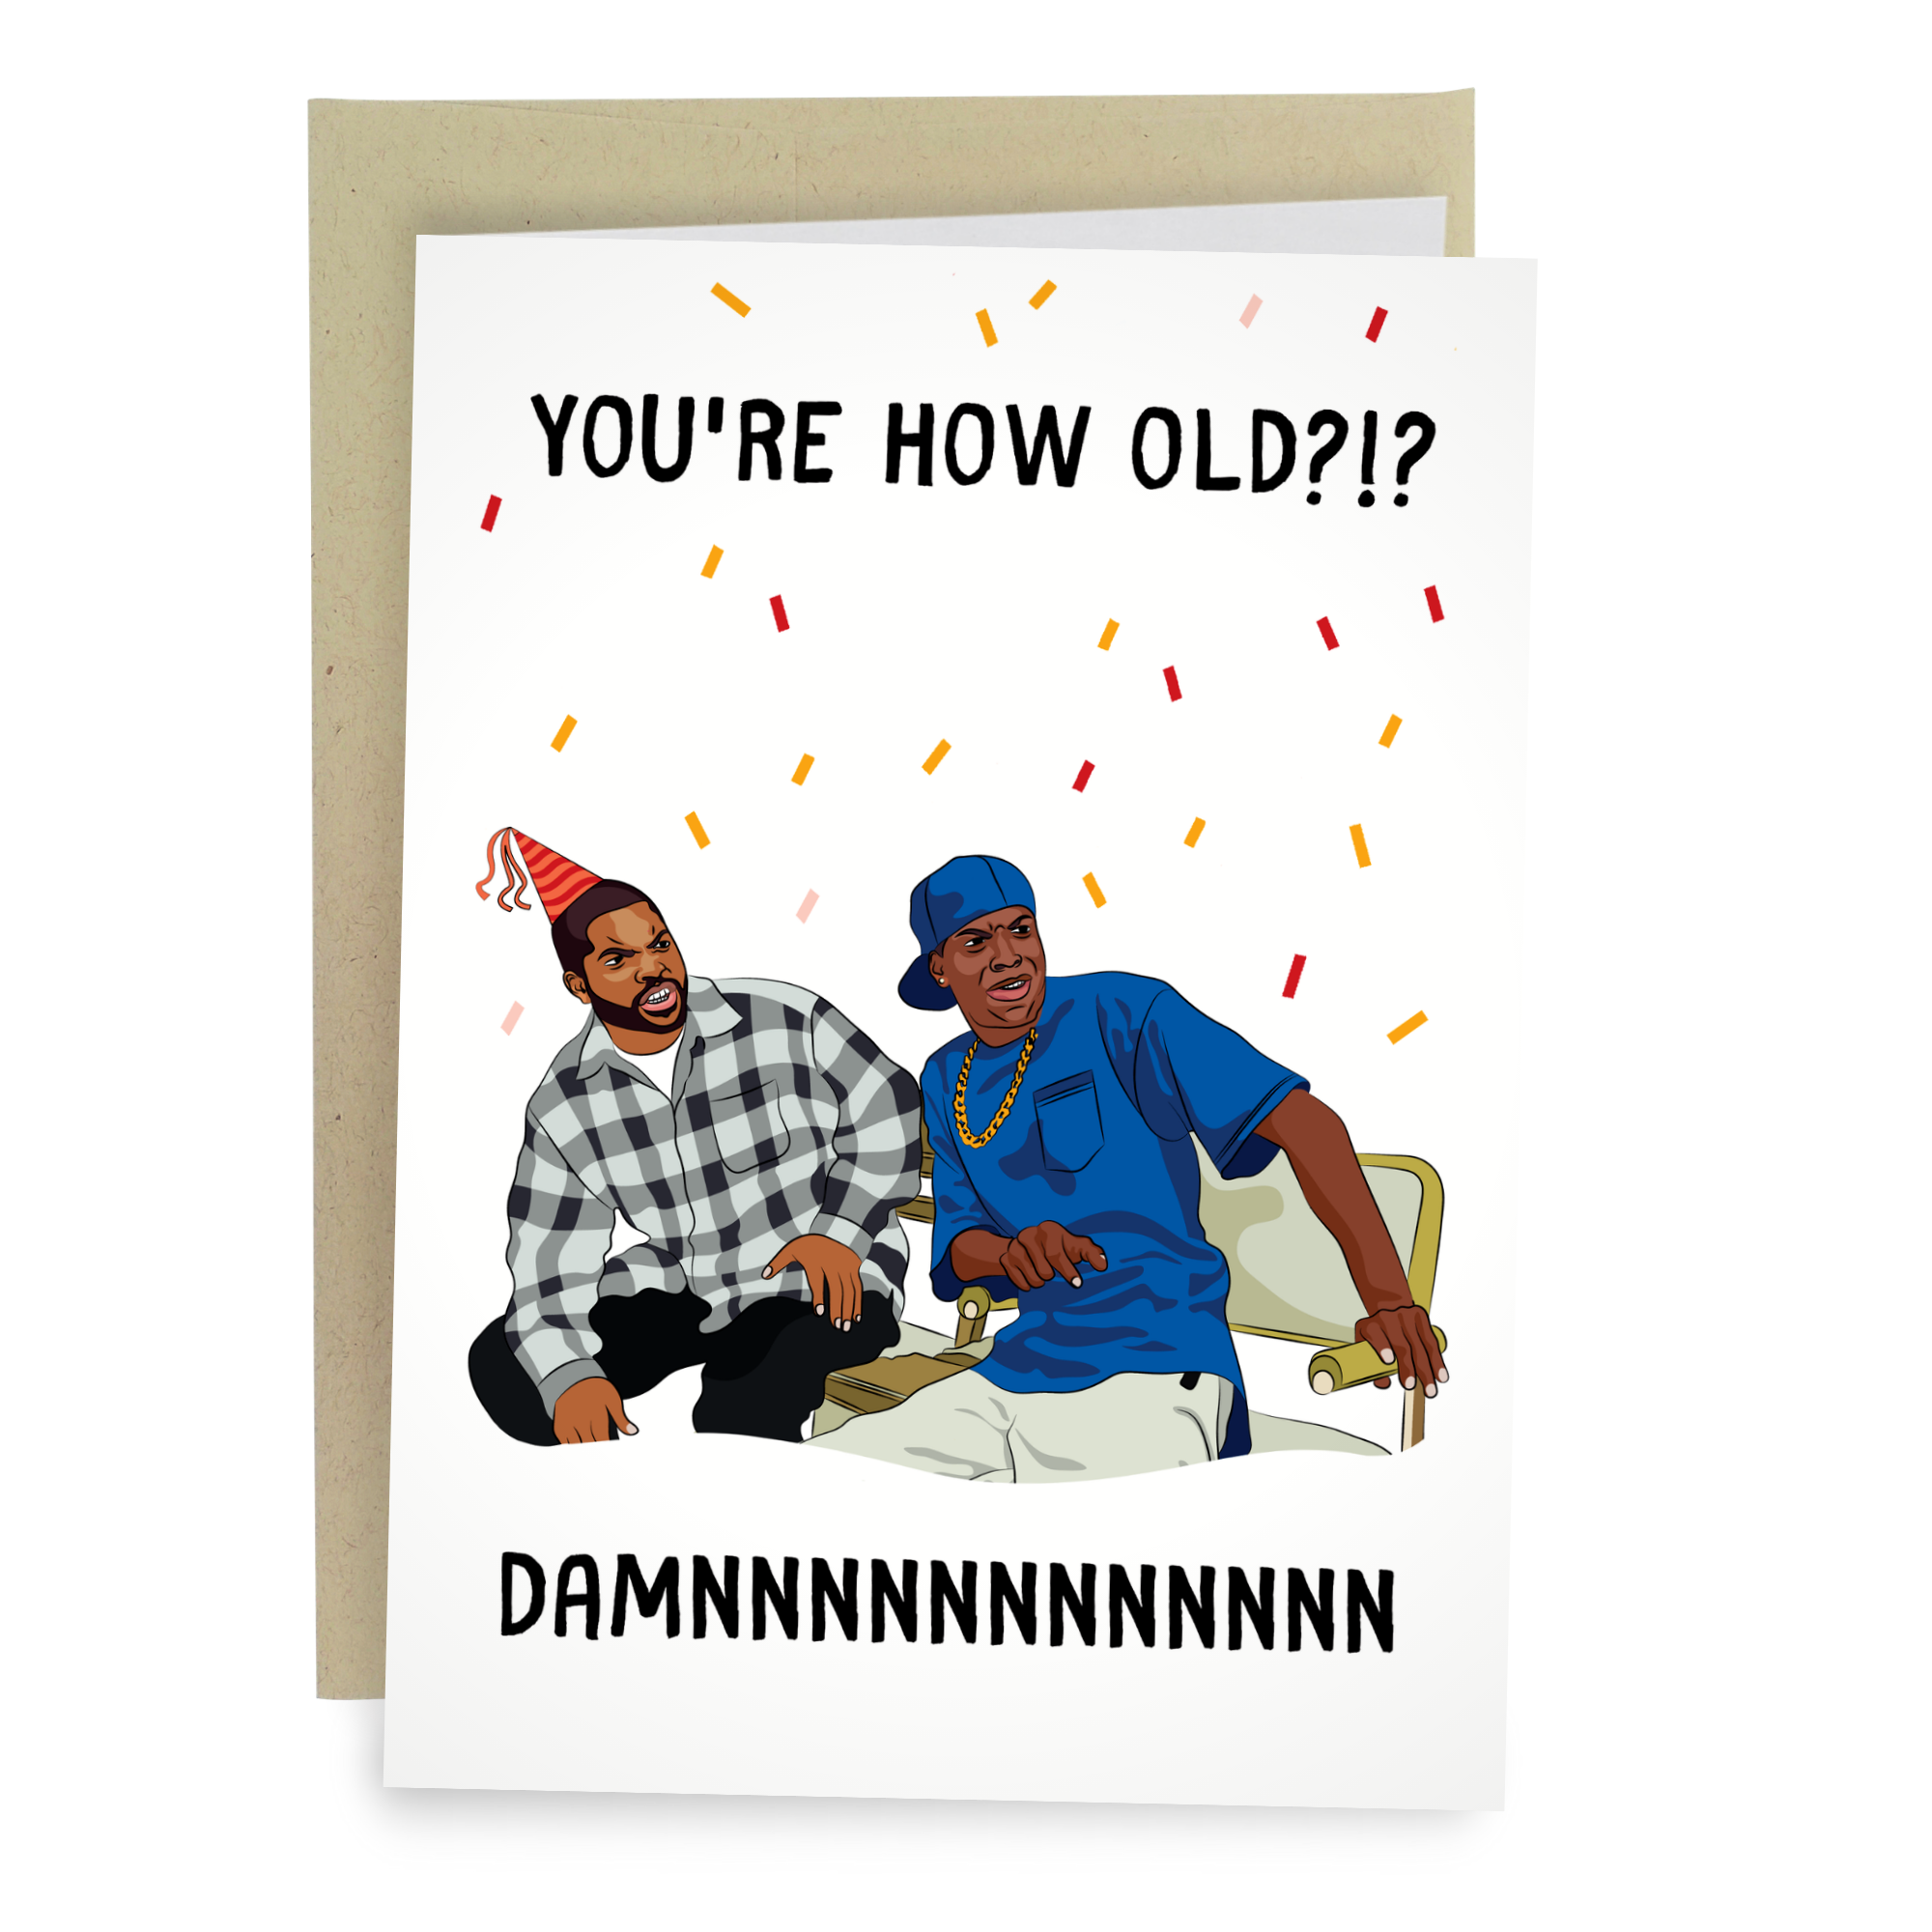 Always Sunny Meme (Dad's BDay) Card